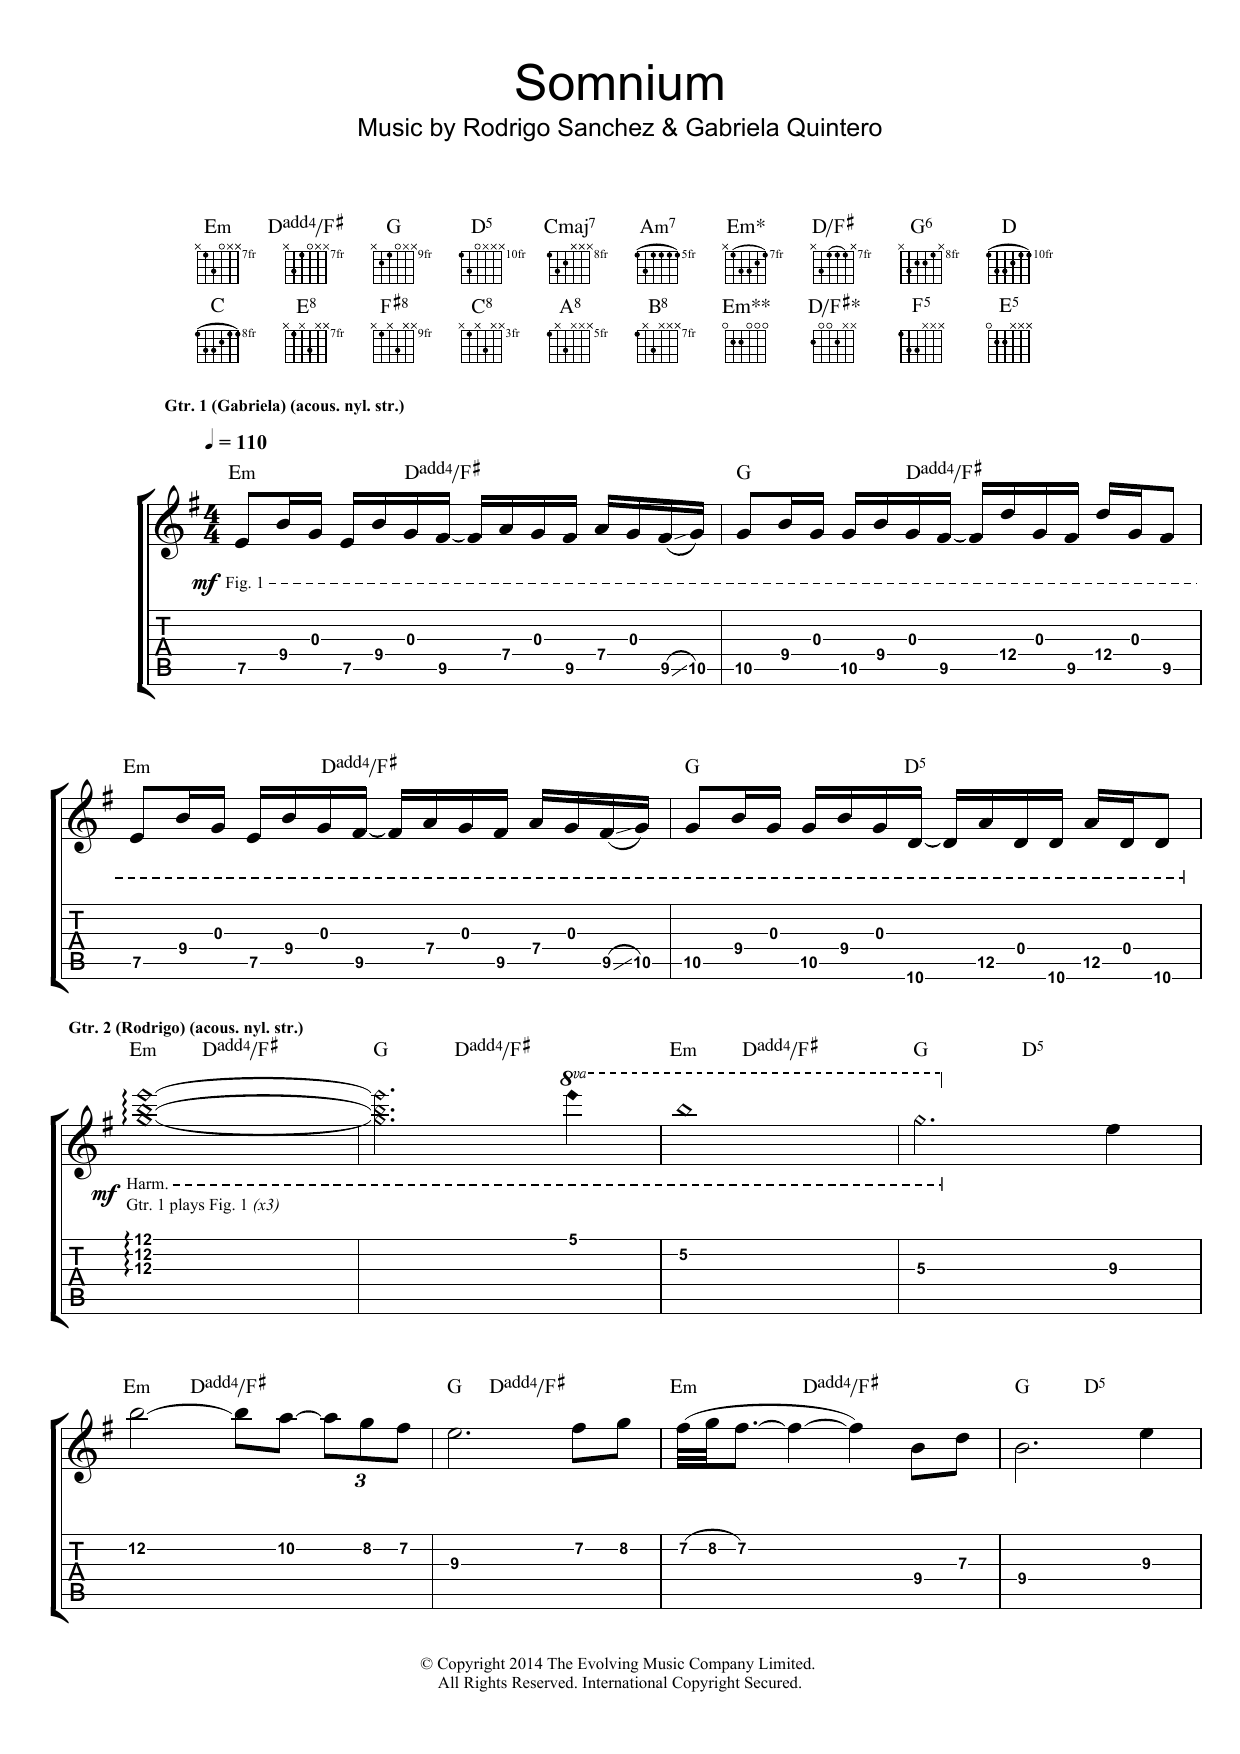 Download Rodrigo y Gabriela Somnium Sheet Music and learn how to play Guitar Tab PDF digital score in minutes